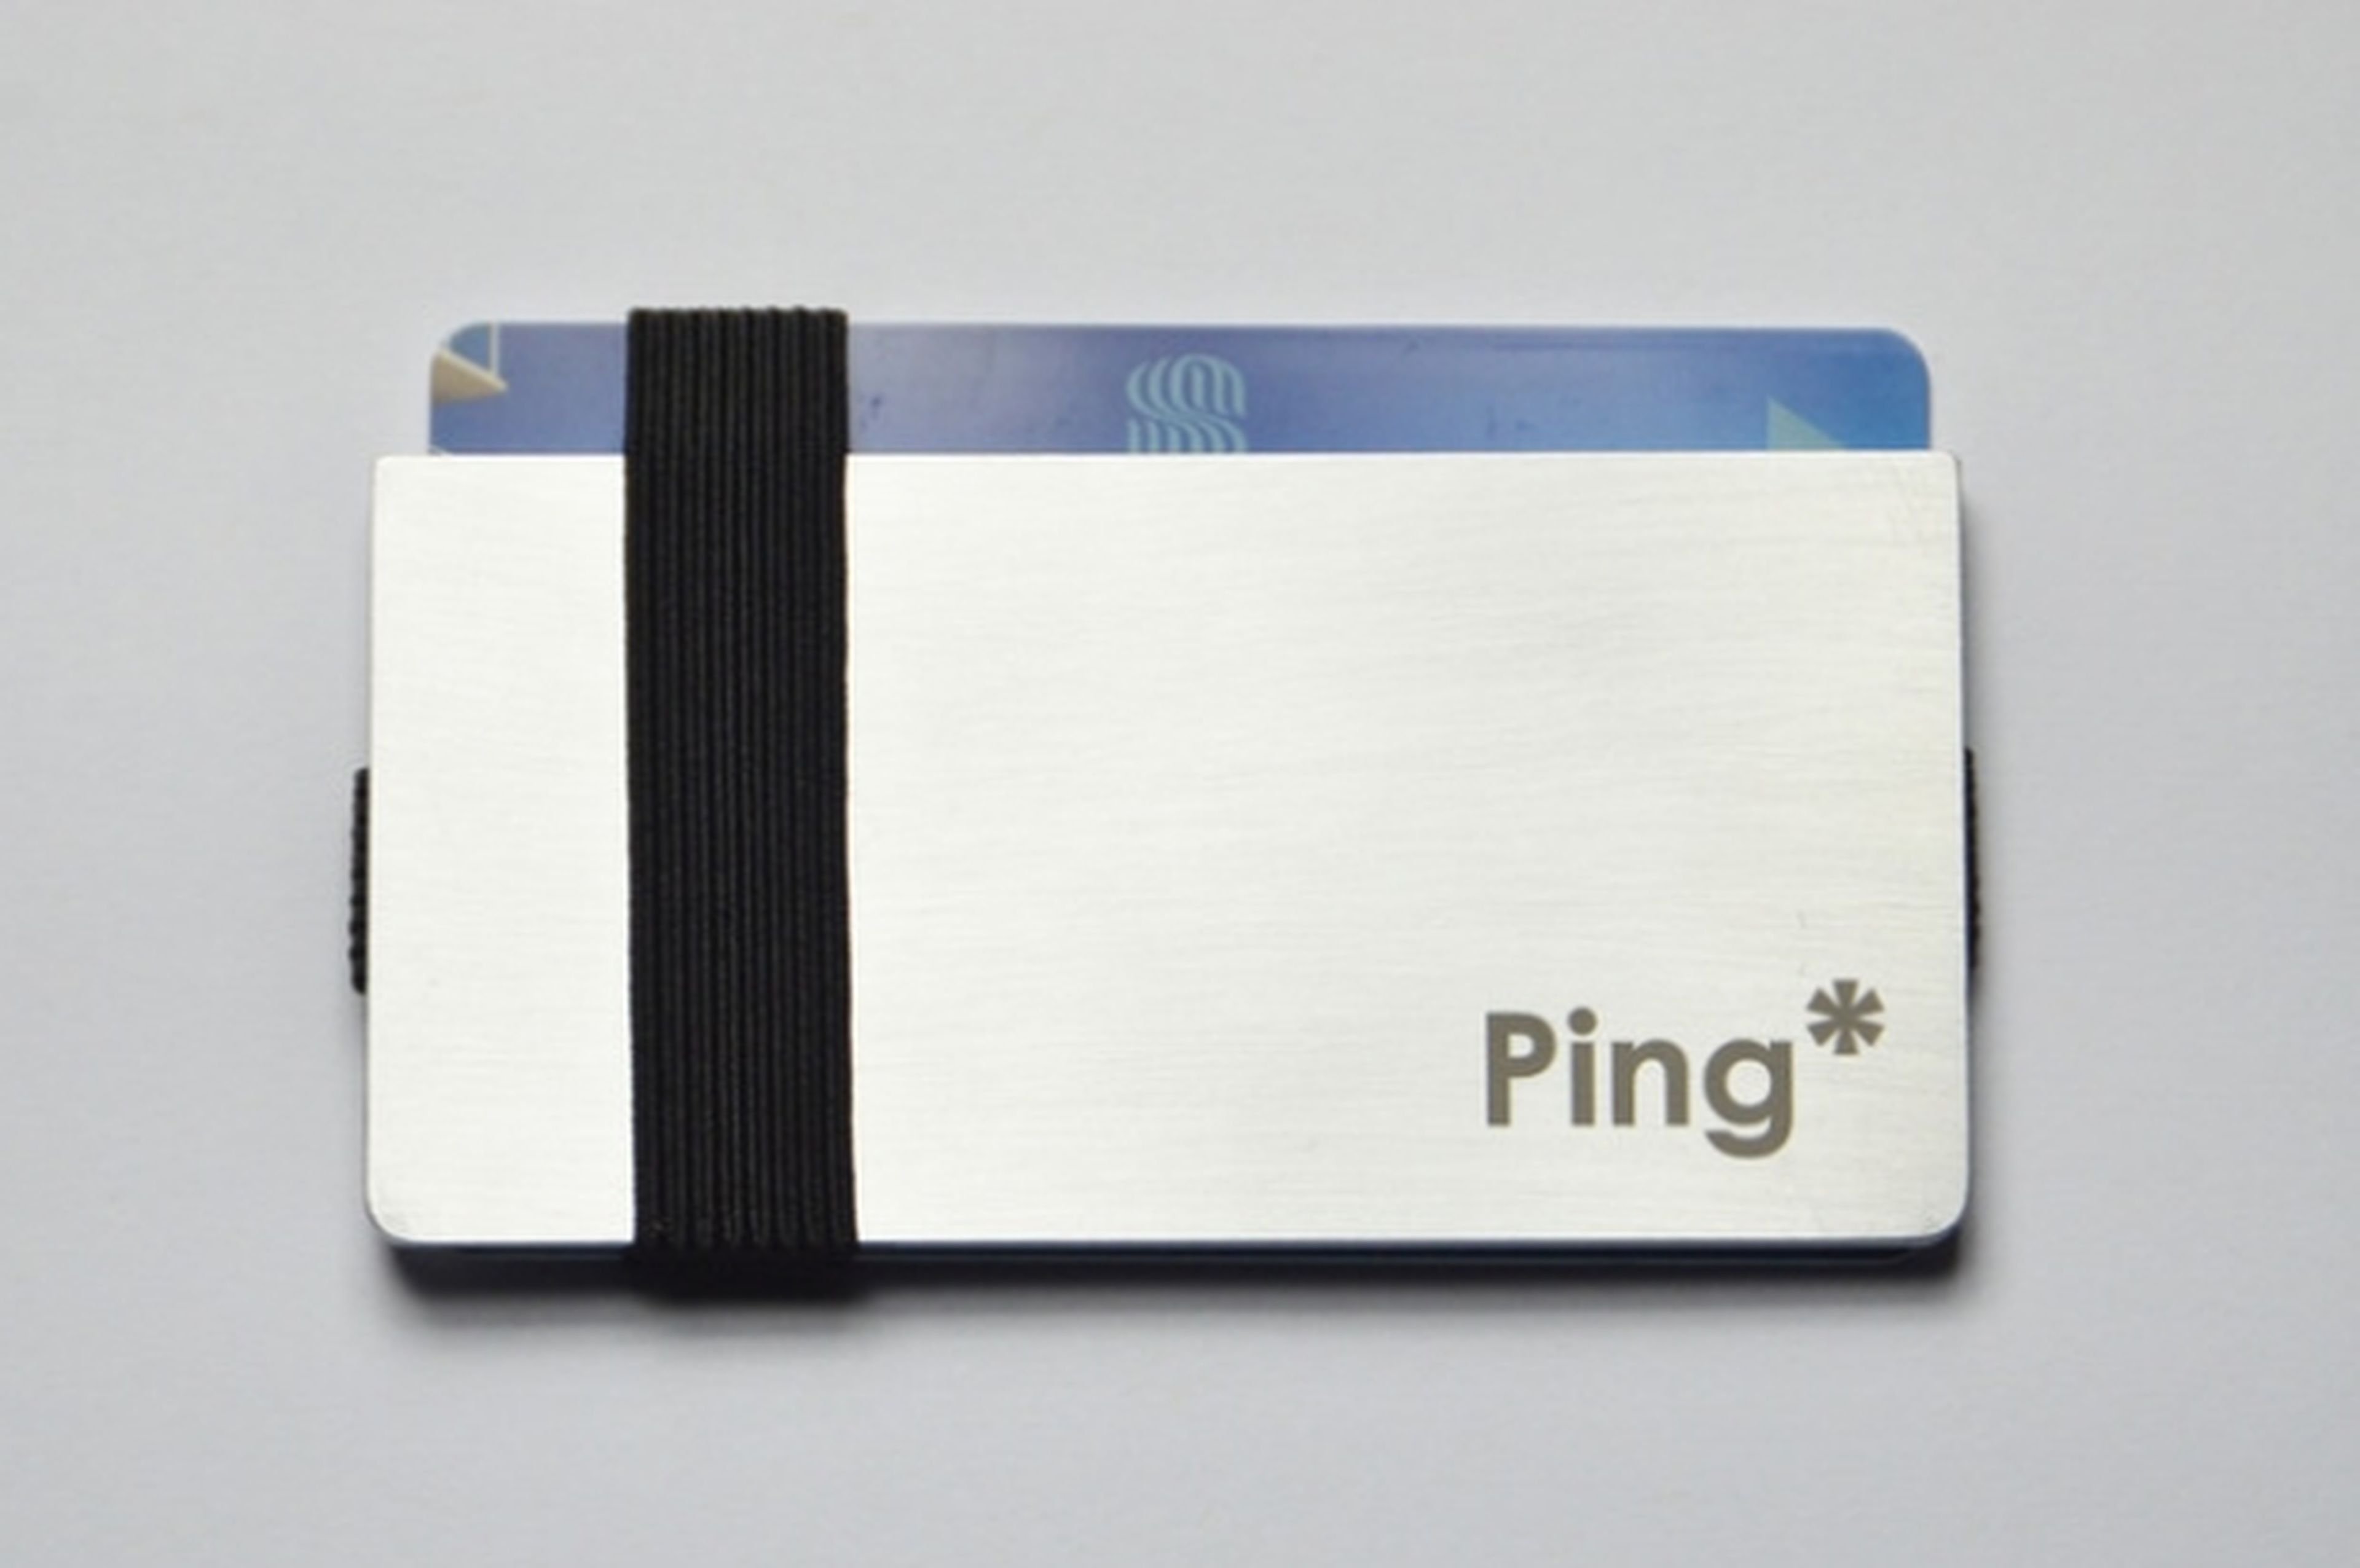 Ping*, la cartera que te grita si la pierdes o te la roban